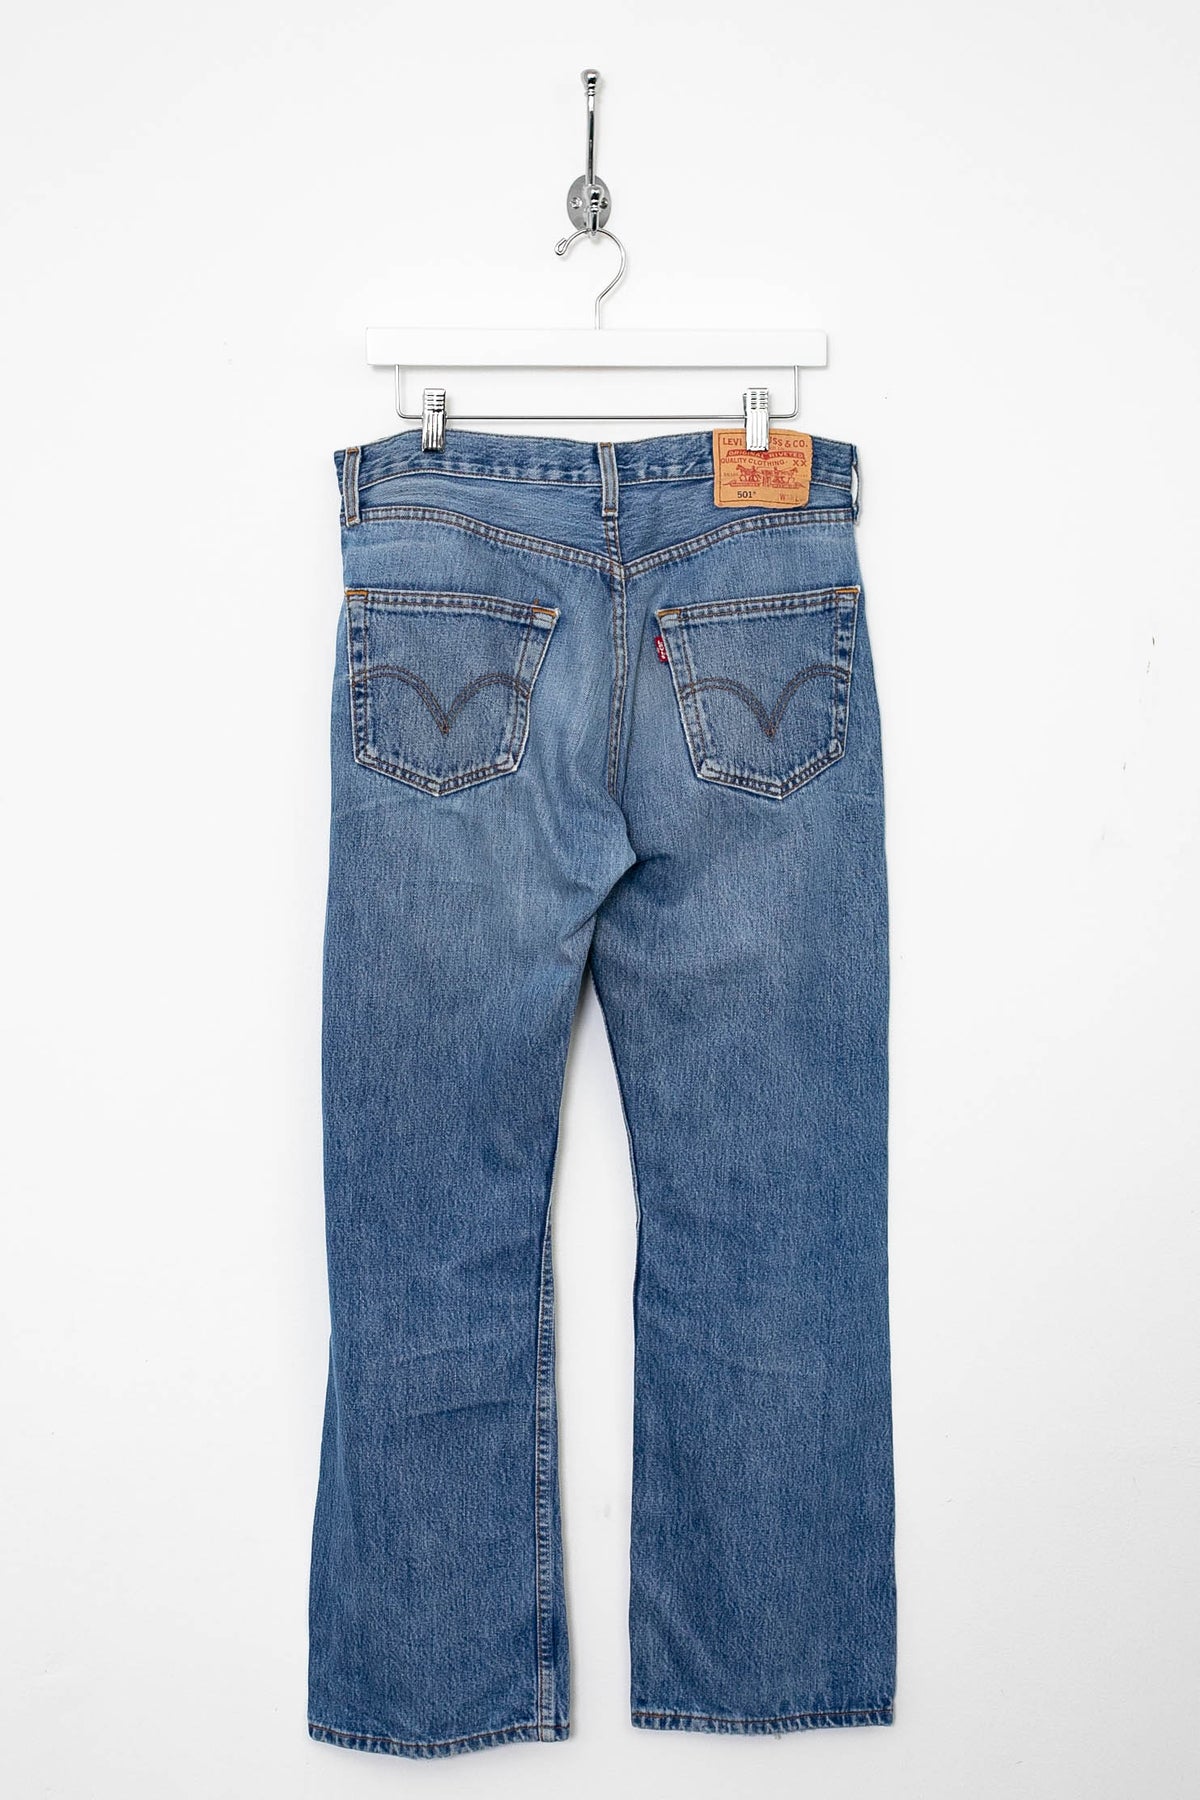 00s Levi's 501 Jeans (S)